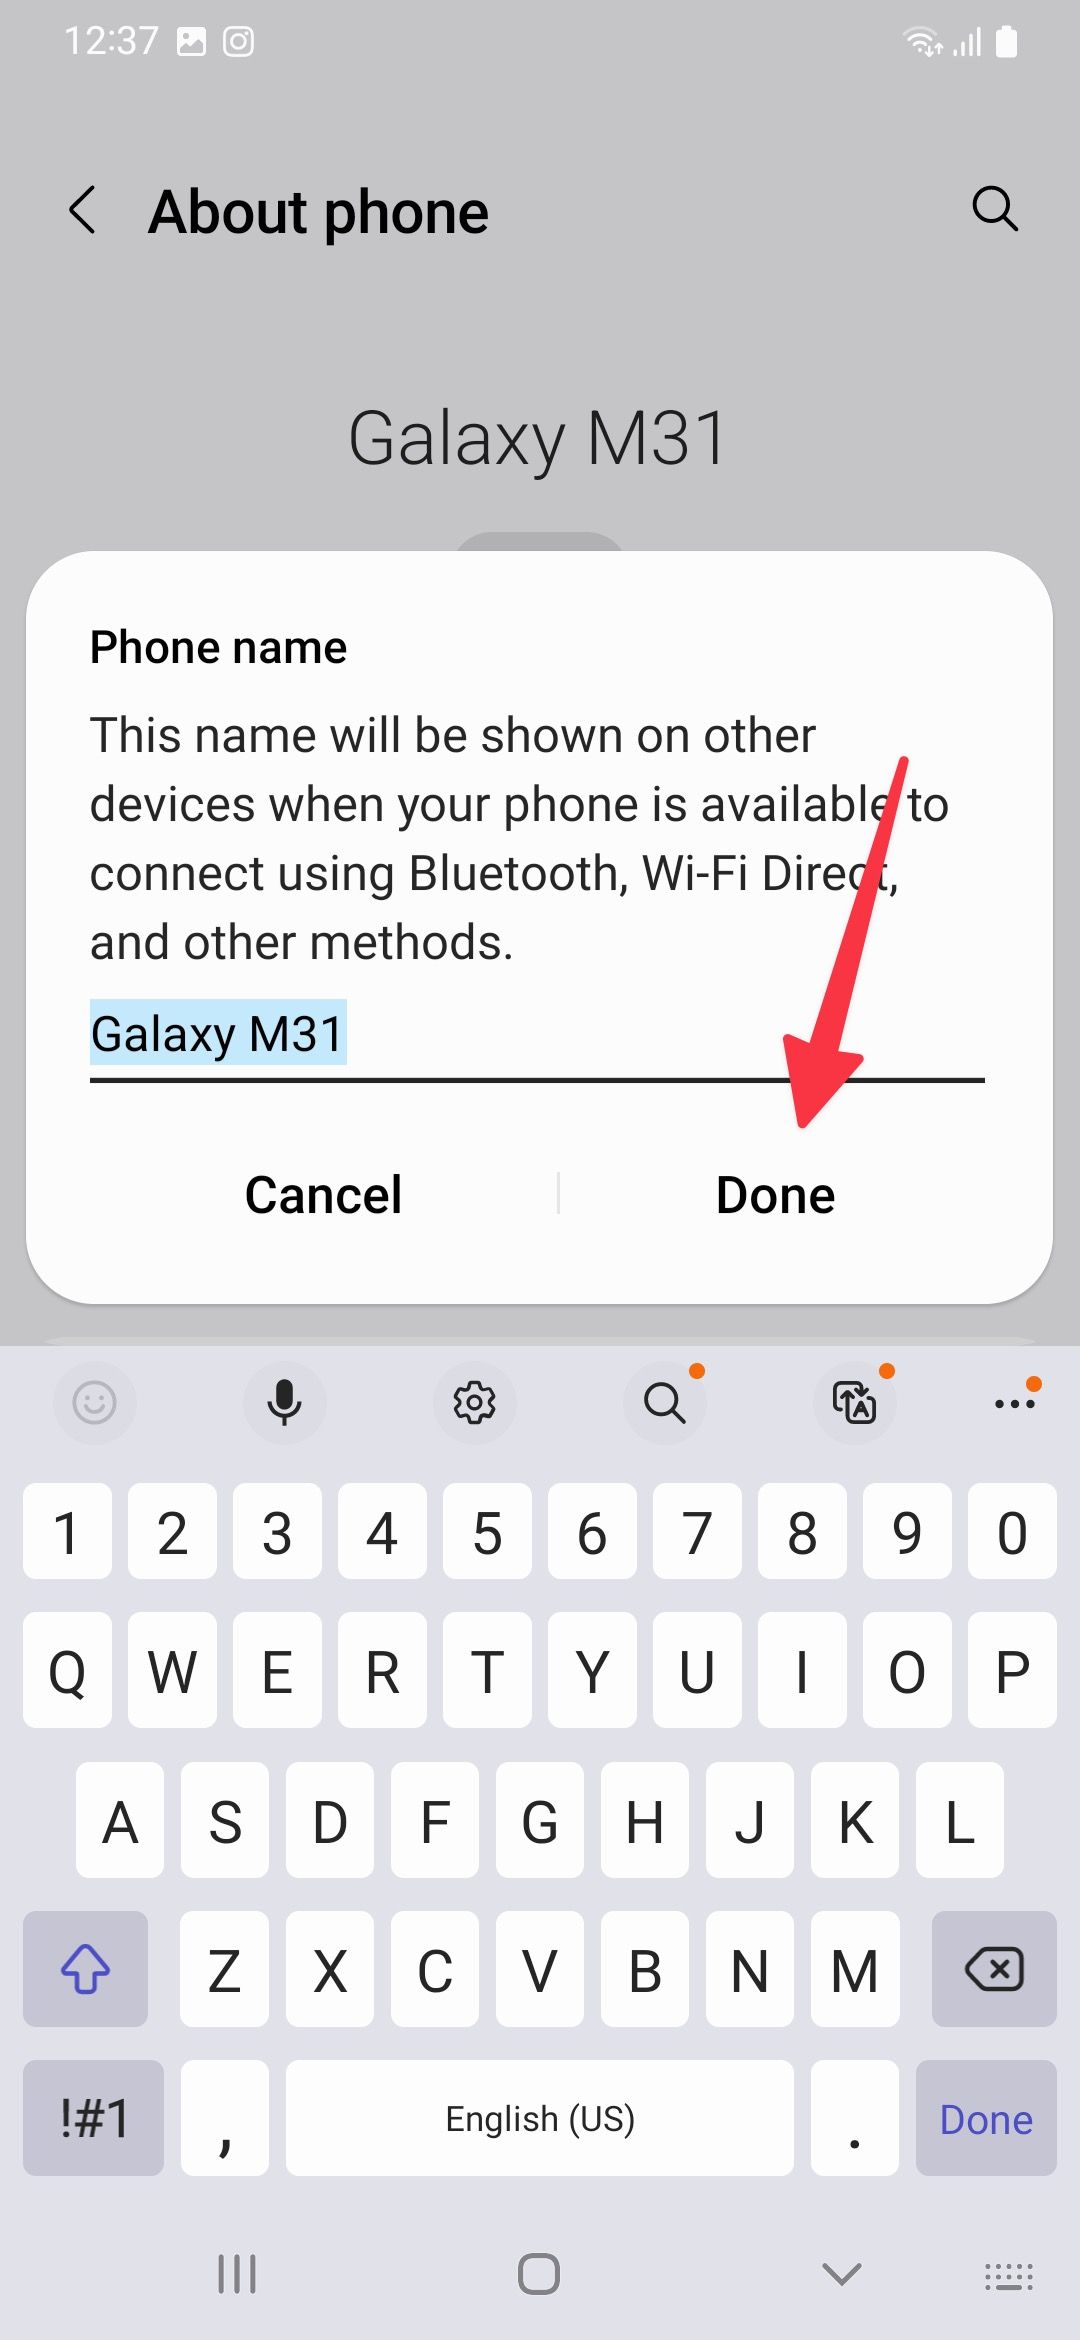 renomeie seu telefone Samsung